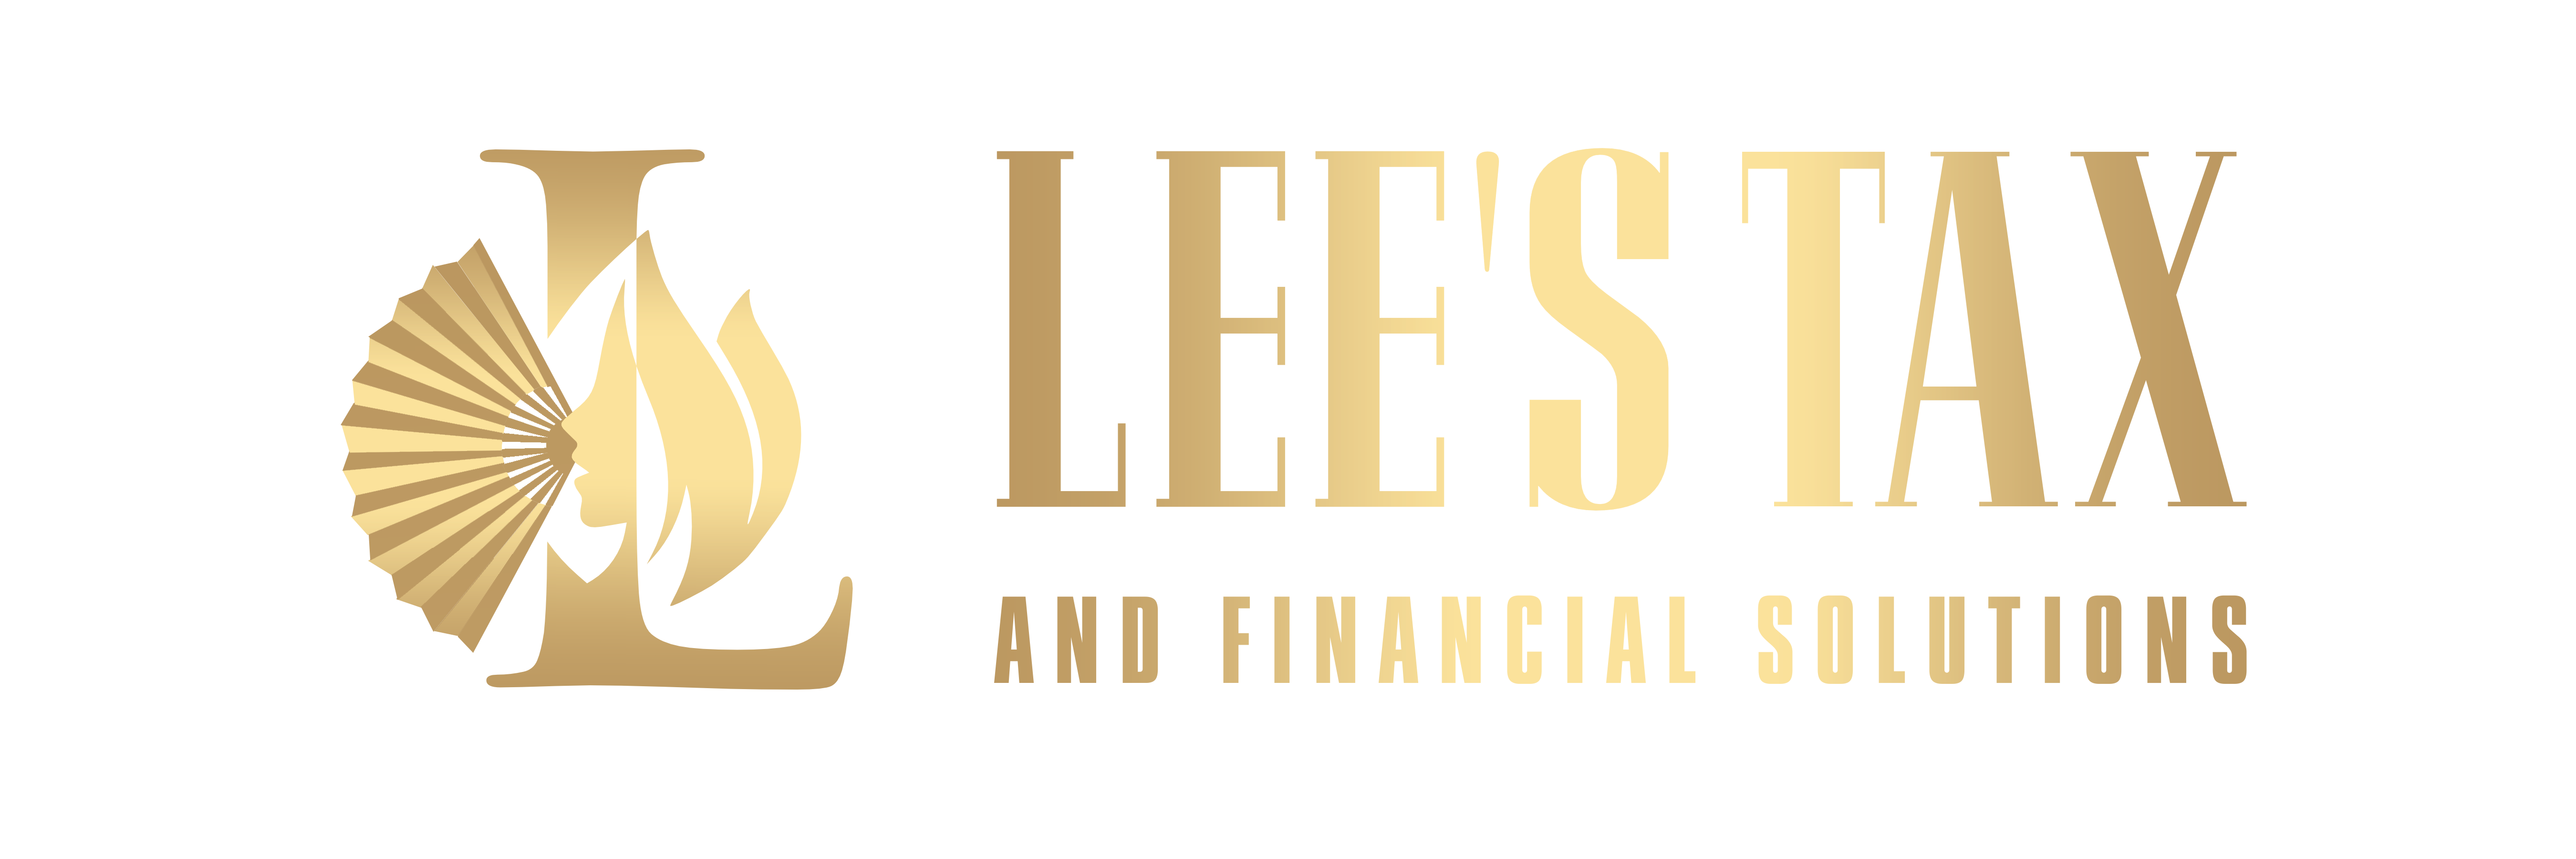 Lee's Tax Service